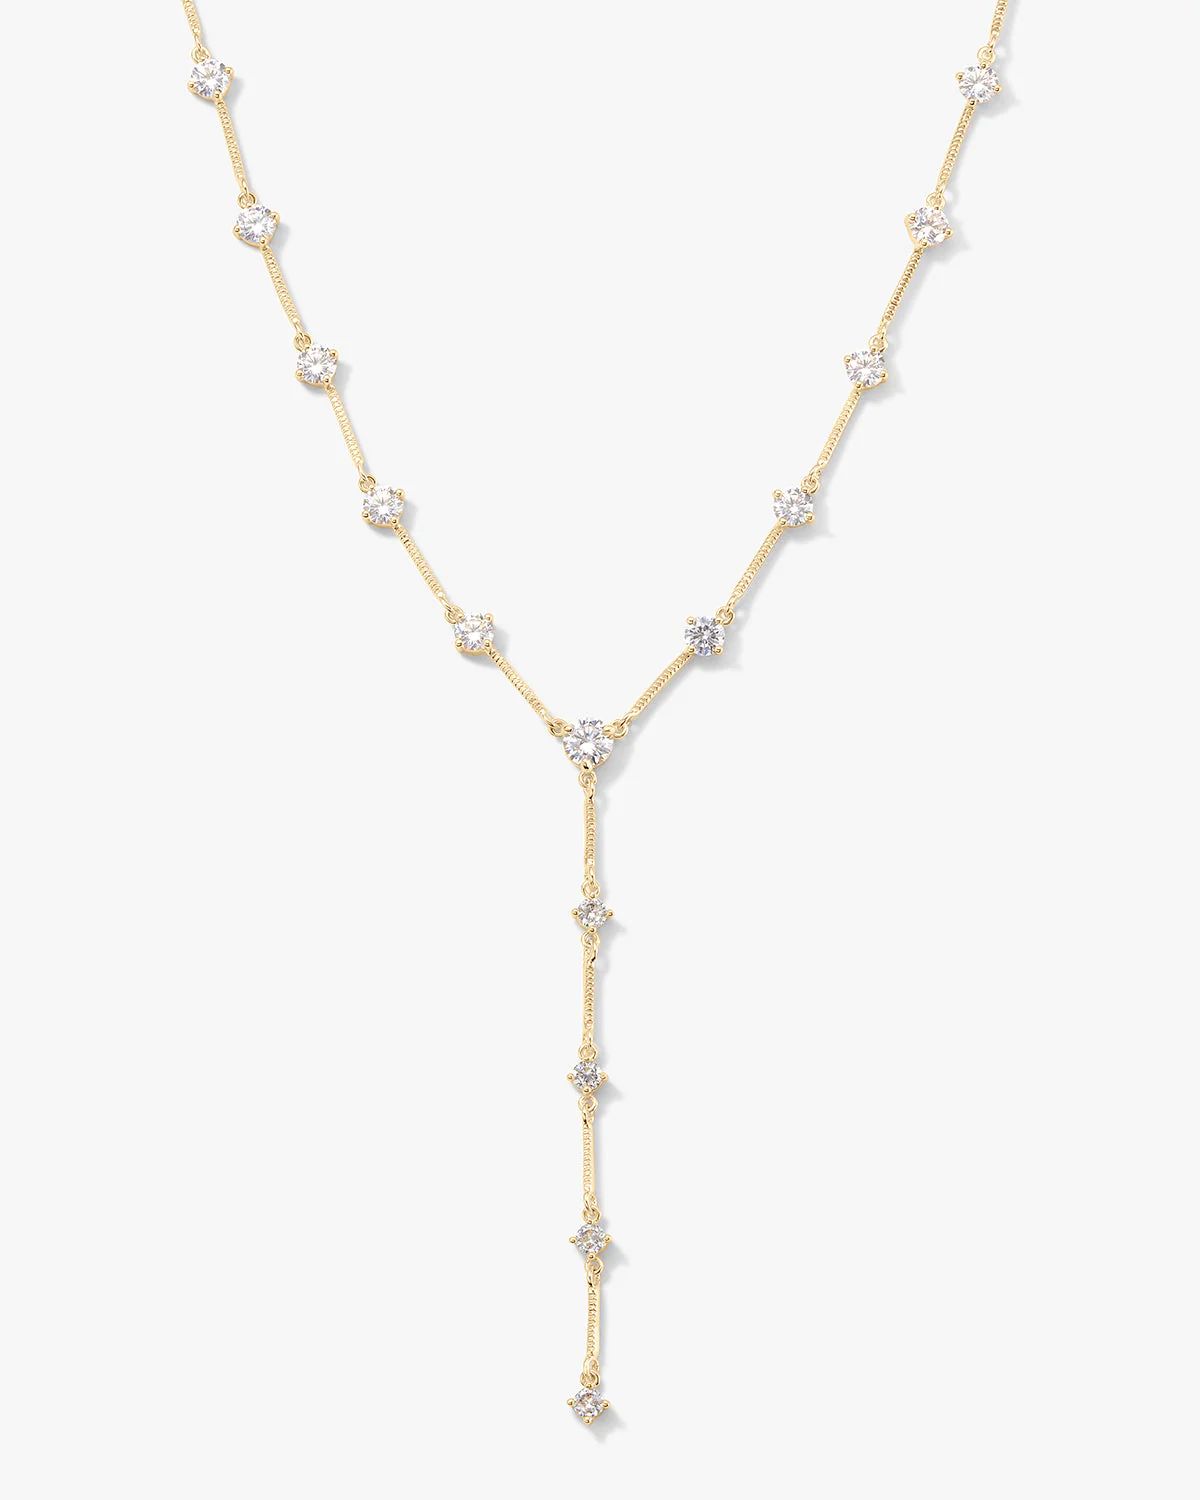 Lavish Lariat Necklace - Gold|White Diamondettes | Melinda Maria